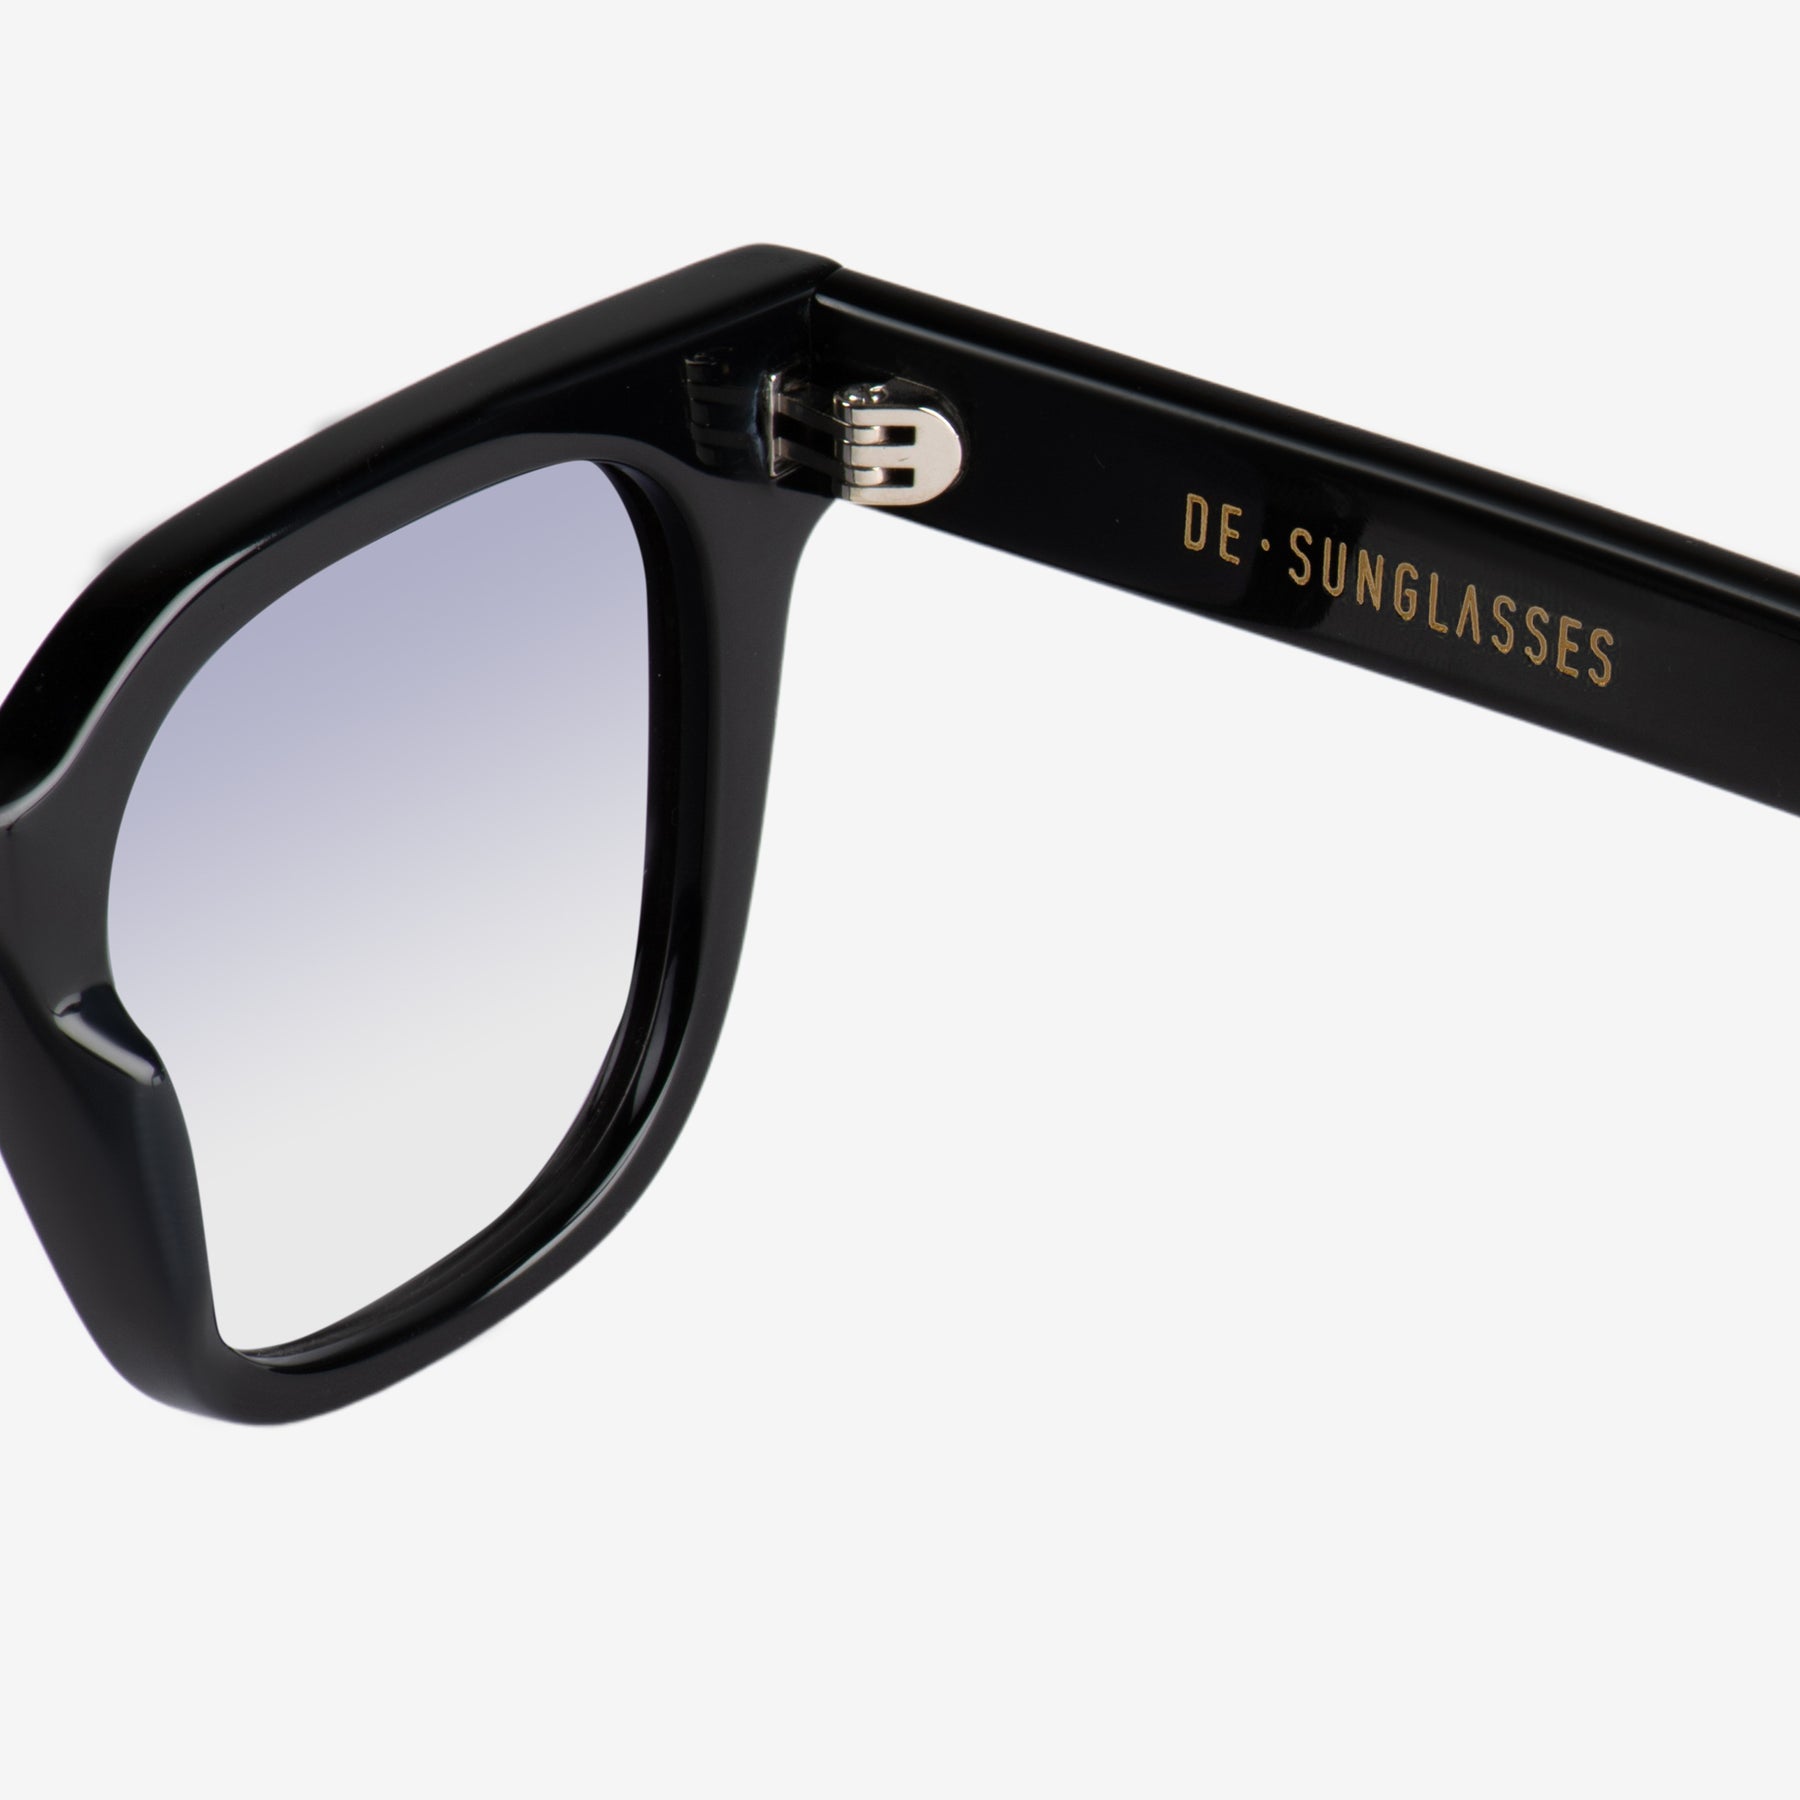 De-sunglasses| Dash blue | Sunglasses for men and women